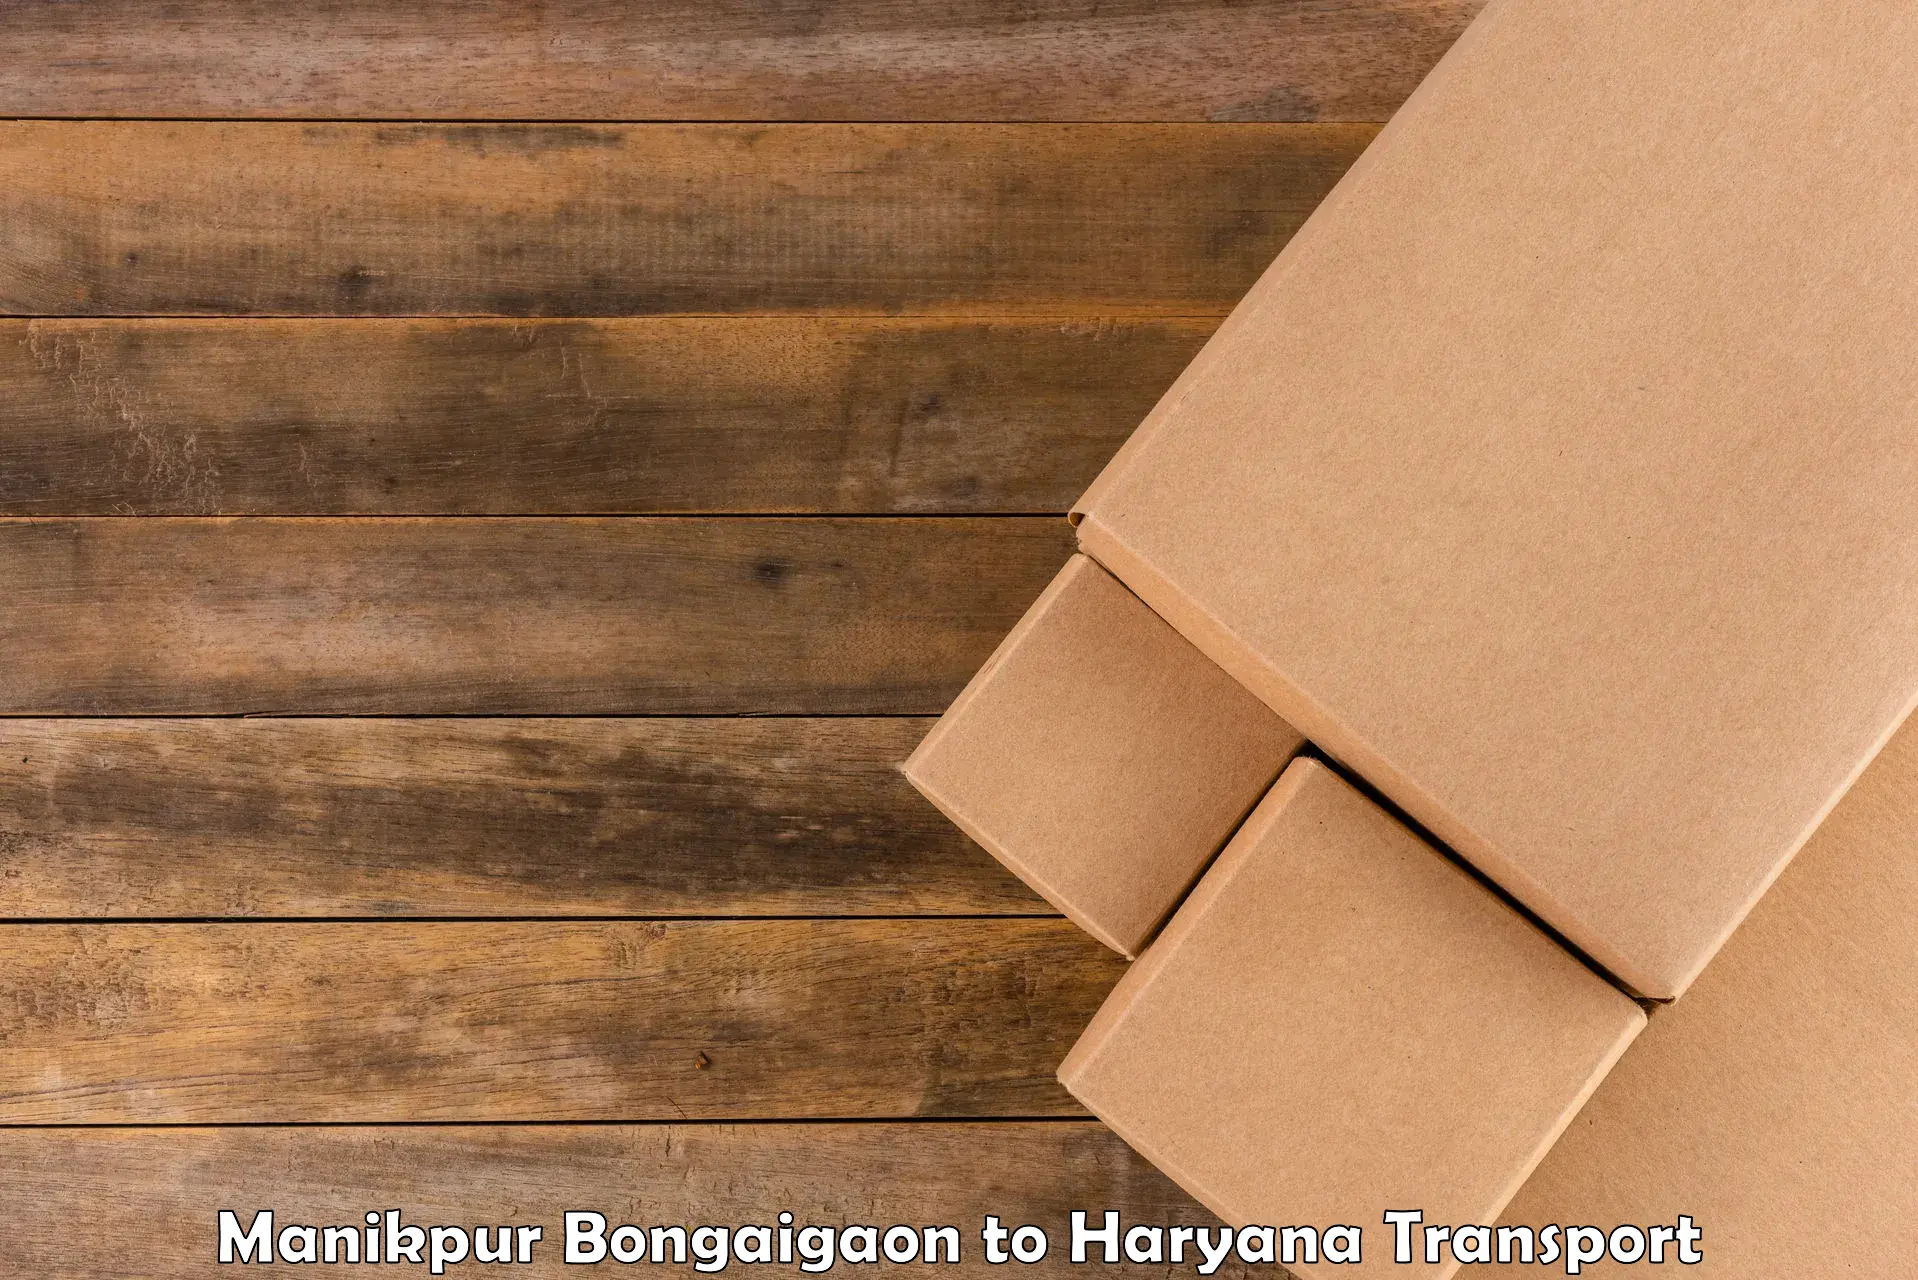 Shipping partner Manikpur Bongaigaon to Gurugram